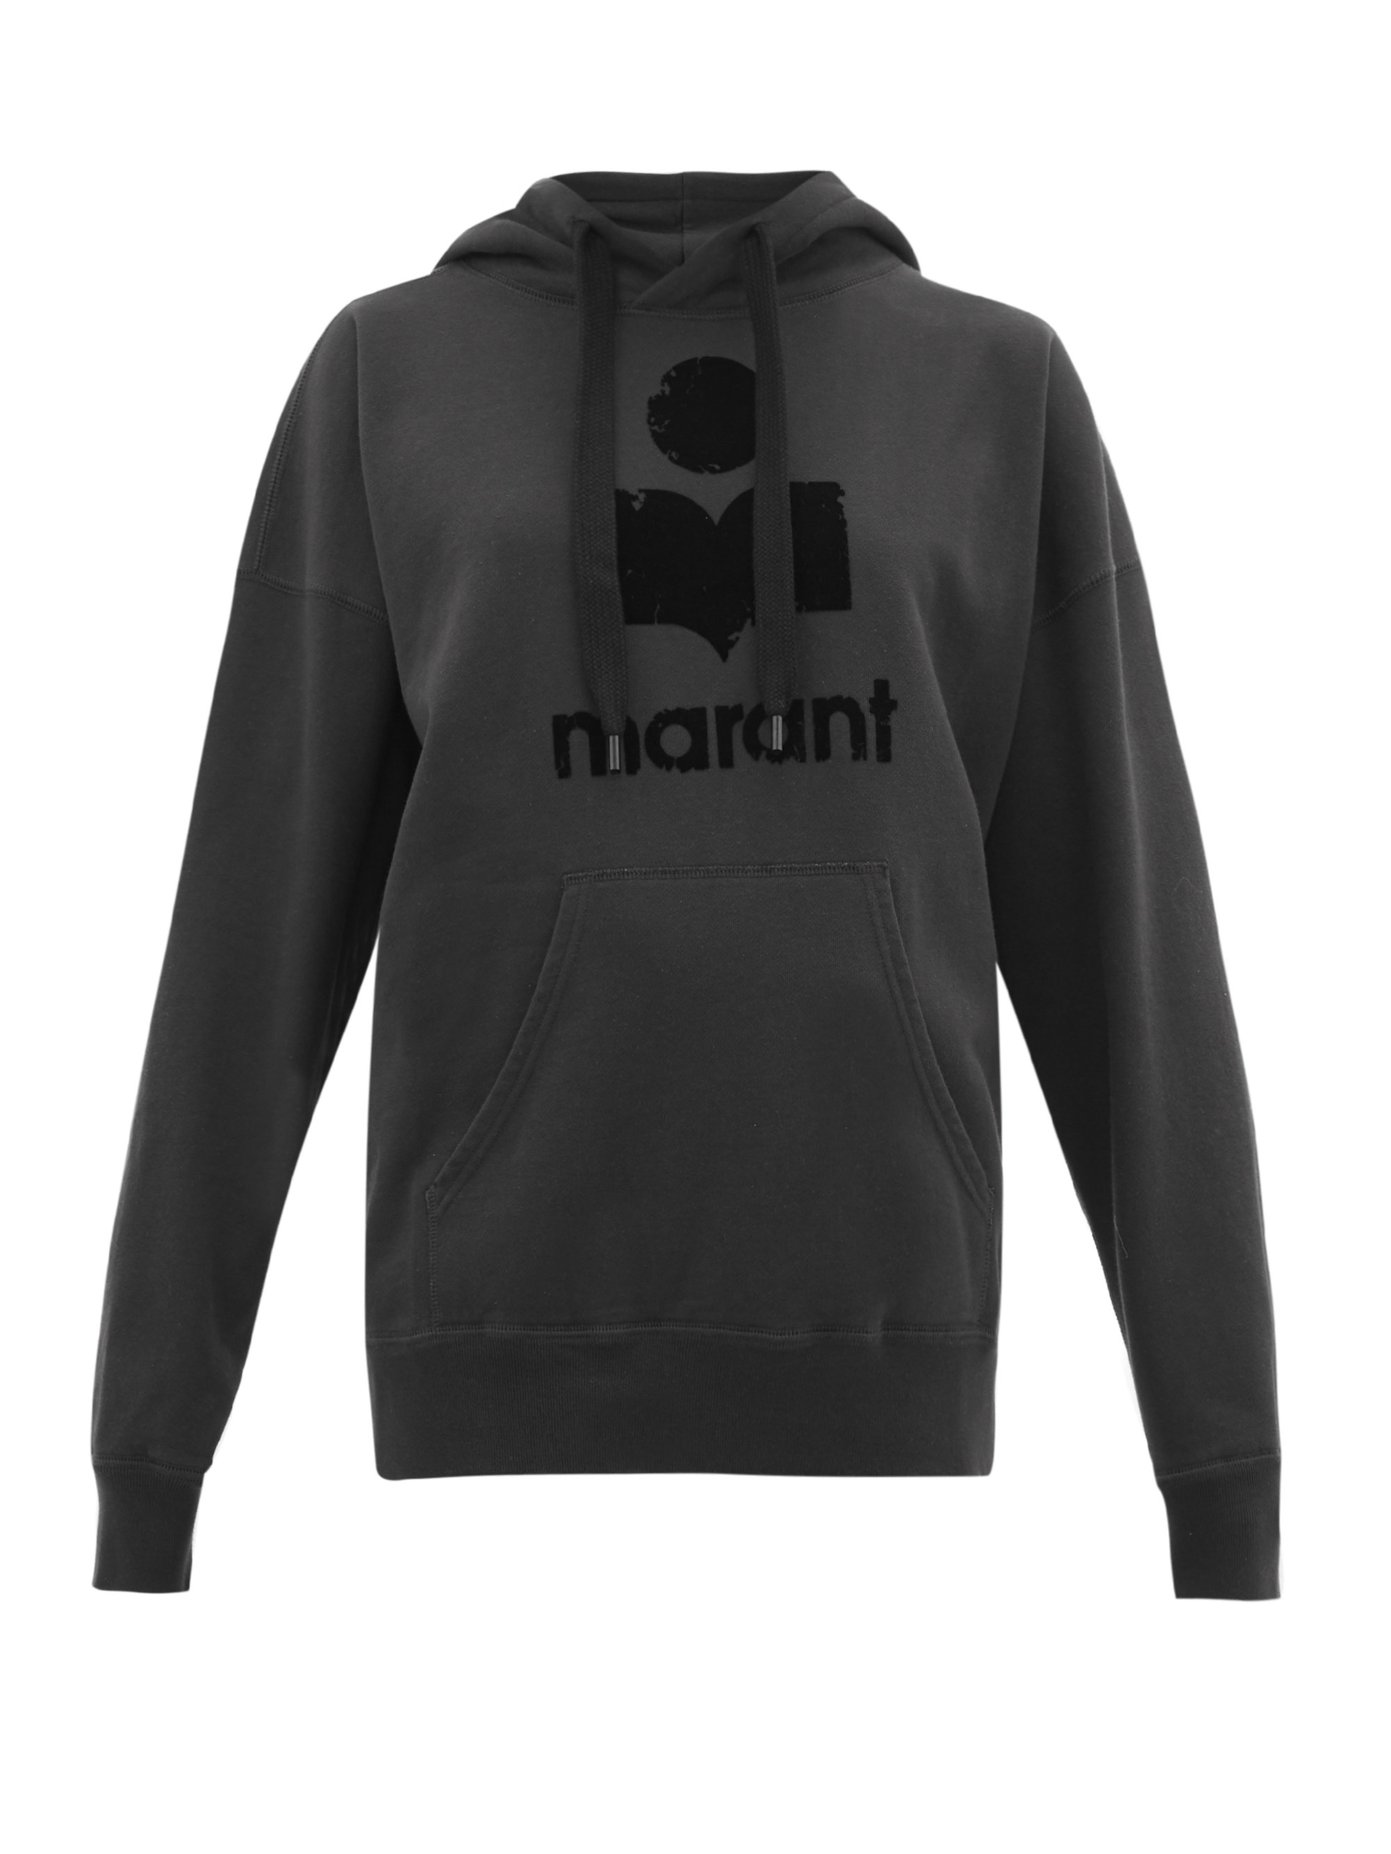 Isabel Marant Hooded Sweatshirt Flash Sales, 53% OFF | www ...